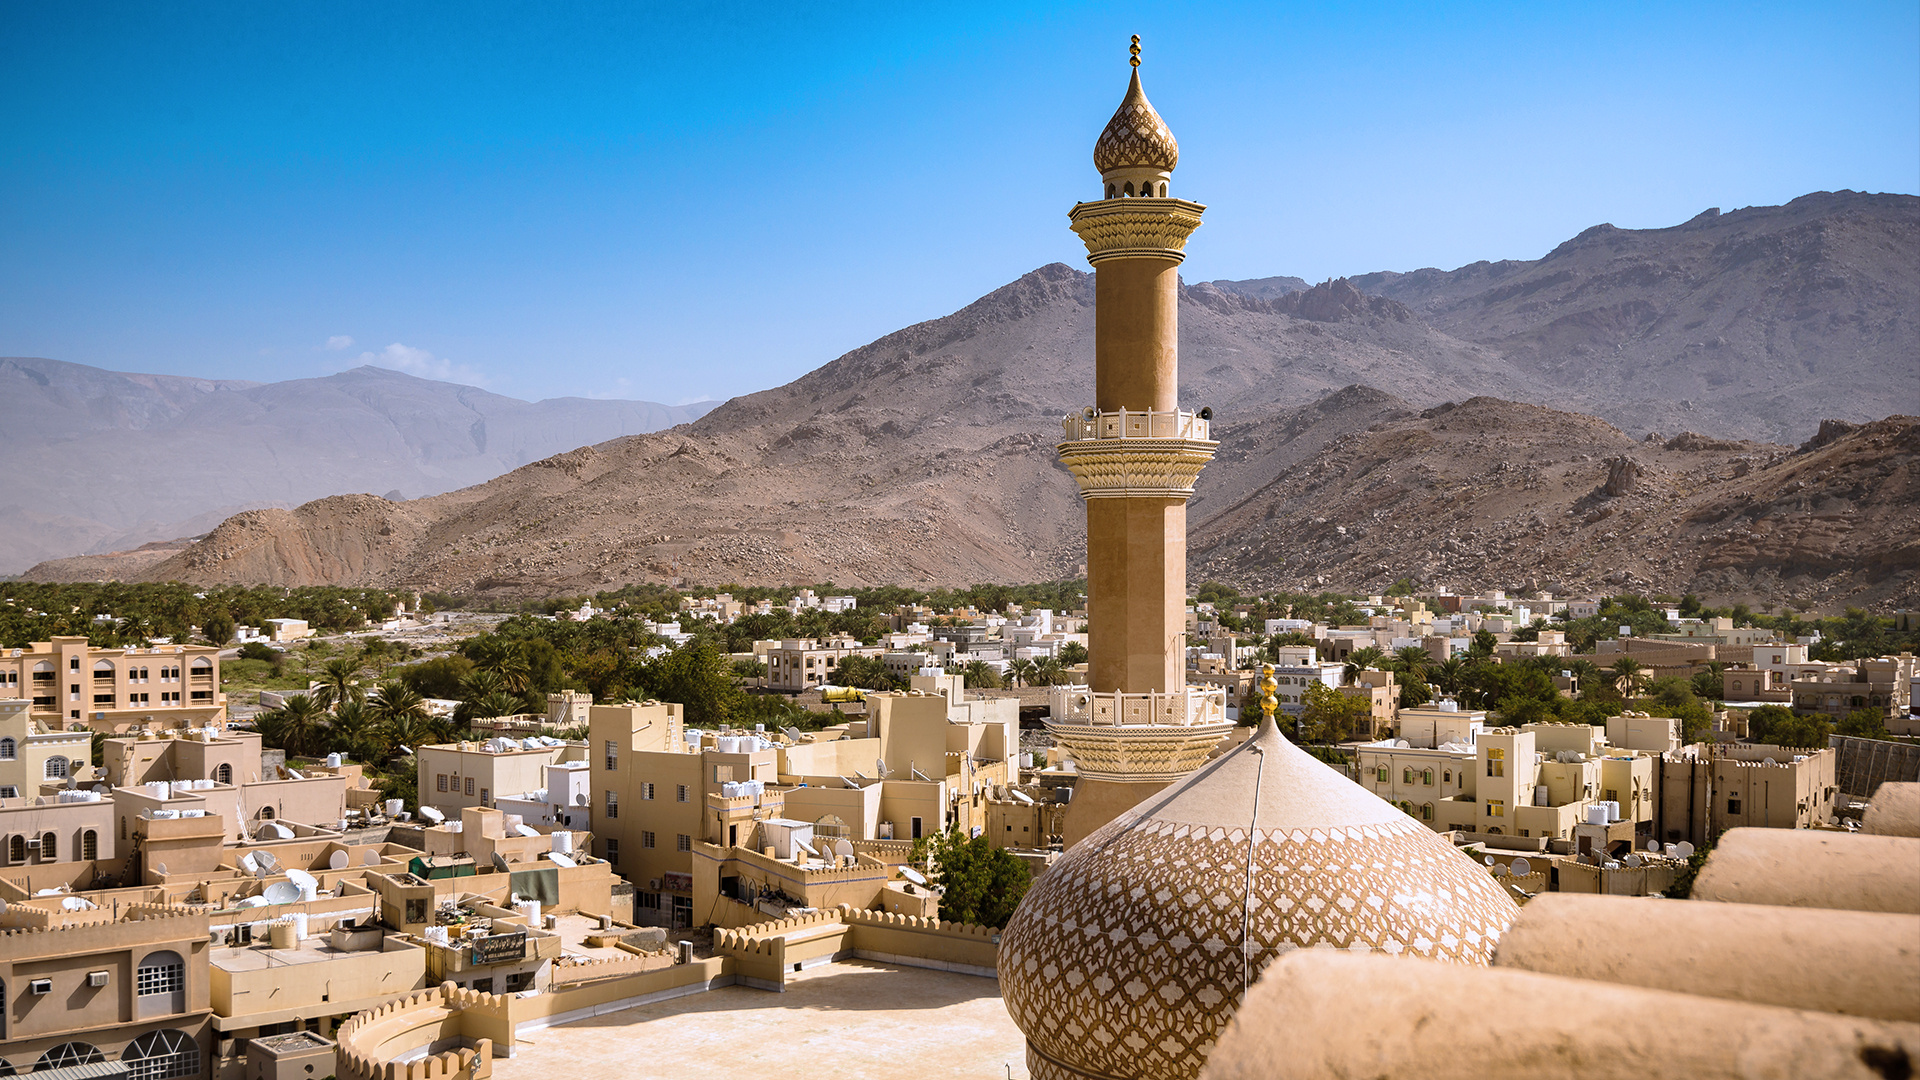 Oman: The sultanate is flanked by the Arabian Sea and the Rub' al Khali. 1920x1080 Full HD Wallpaper.